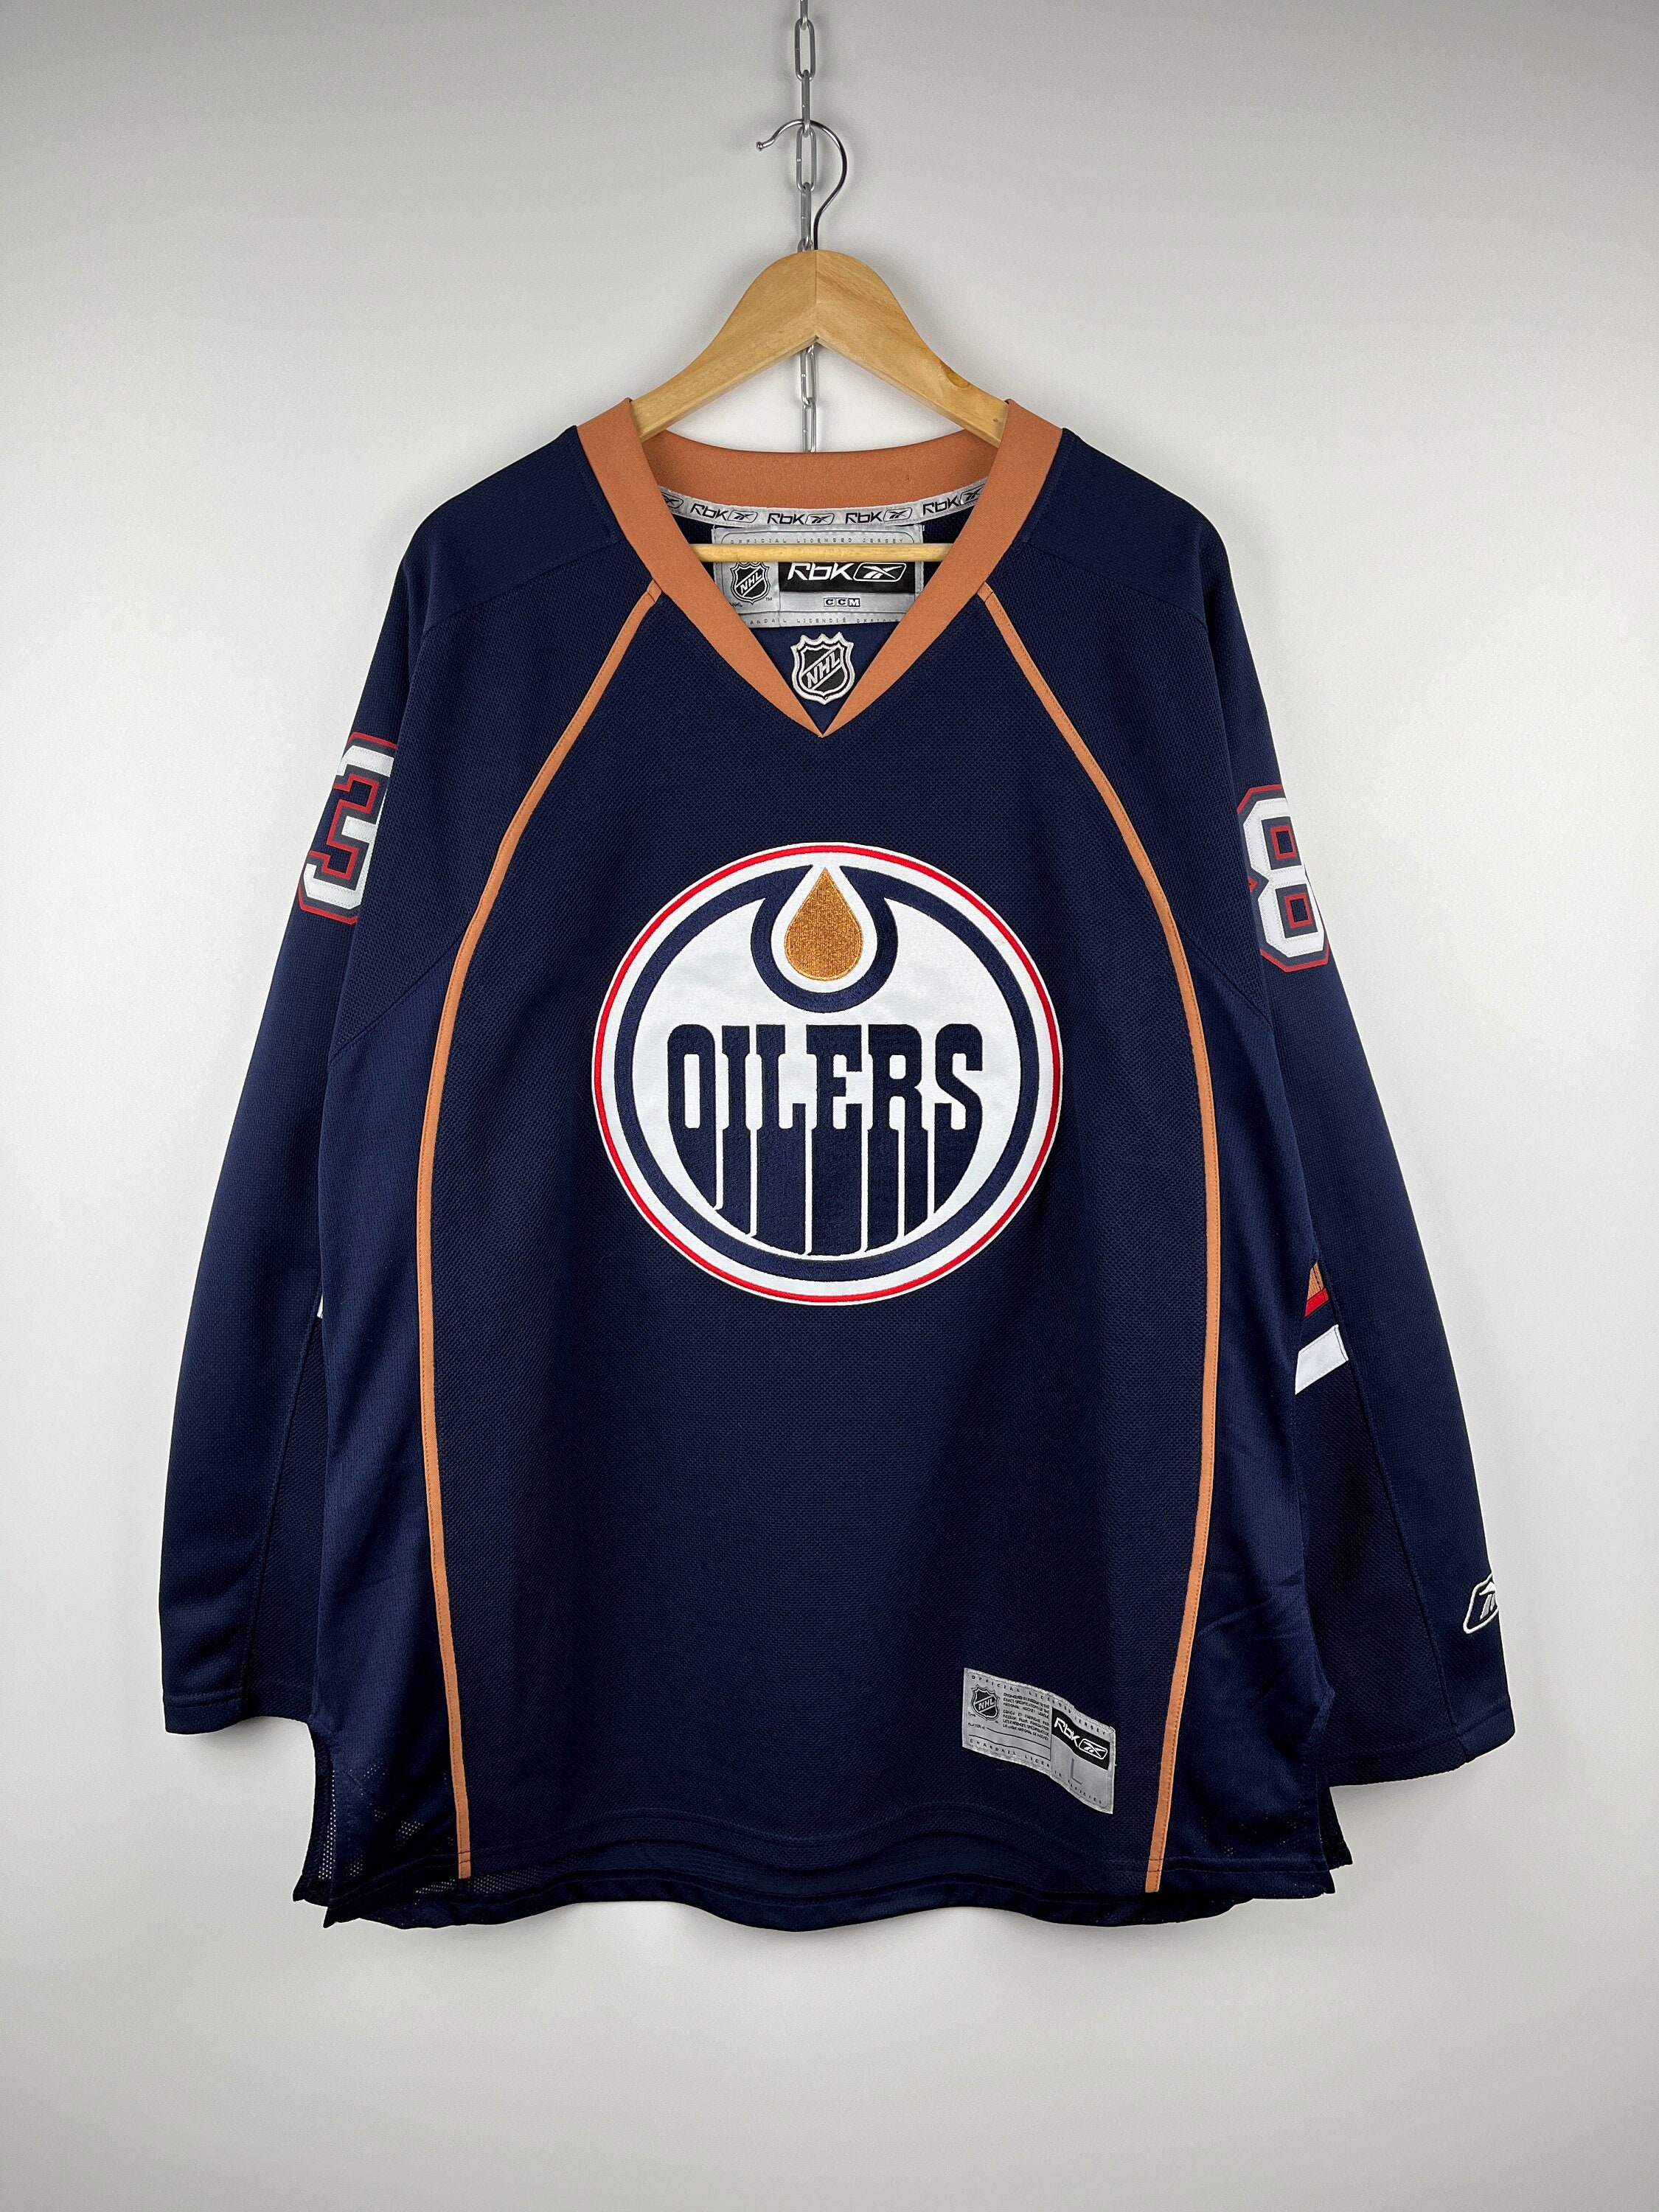 Lostboysvintage Vintage 1990s Edmonton Oilers NHL #01 Blank Hockey Jersey / Sportswear / Embroidered / Athleisure / Vintage Oilers / Streetwear